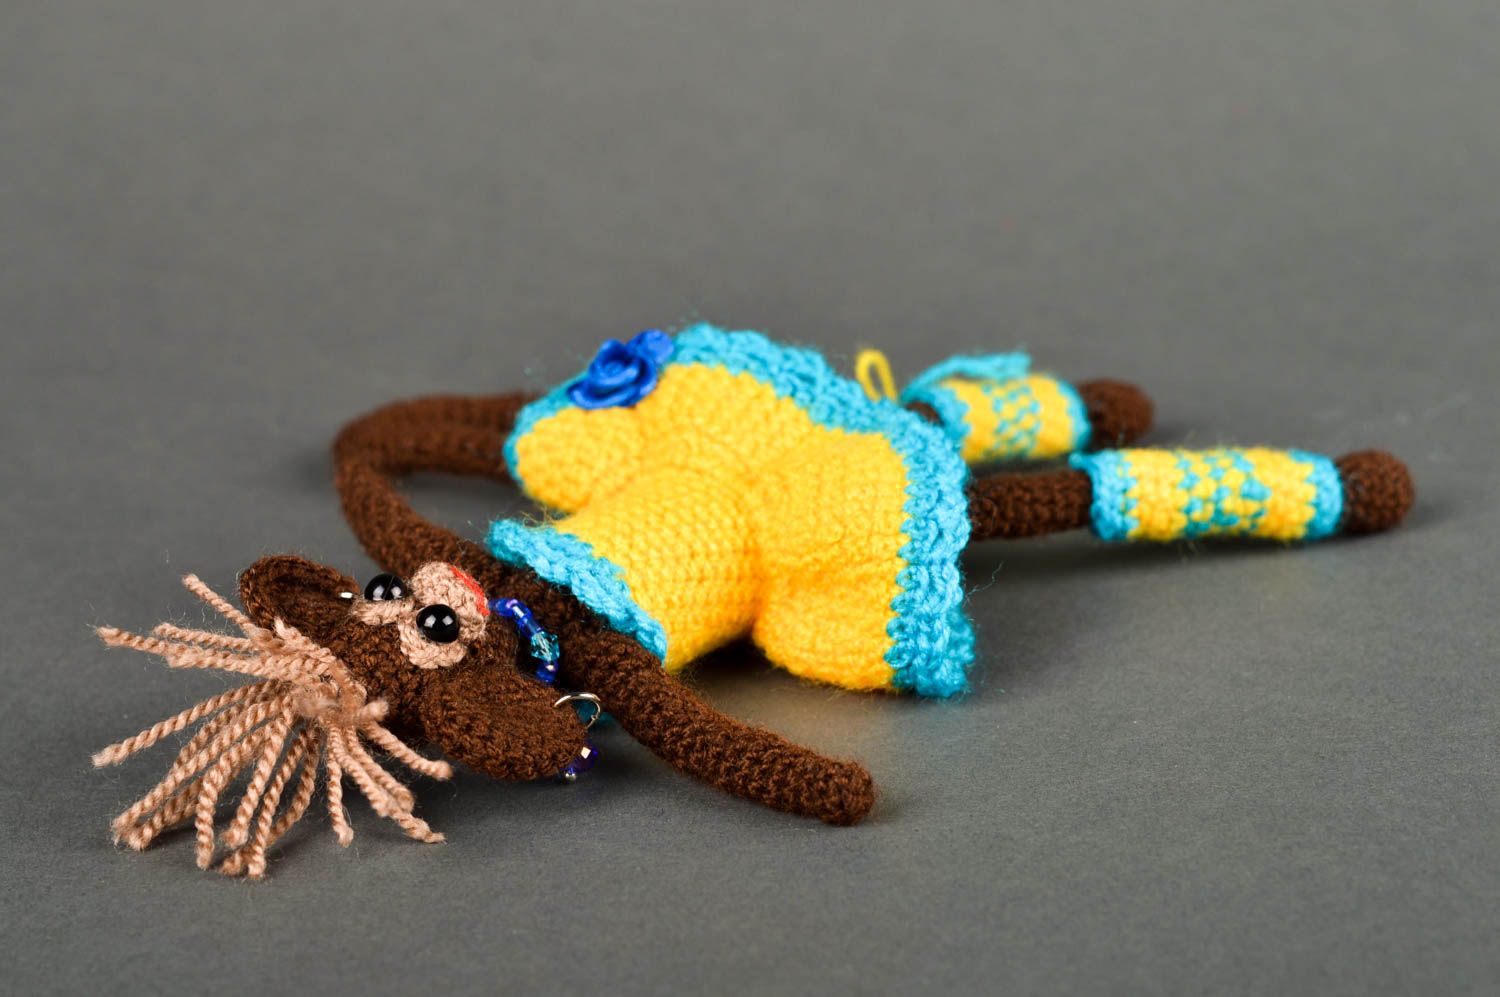 Hand-crocheted creative toy handmade trendy toy for babies nursery decor photo 2